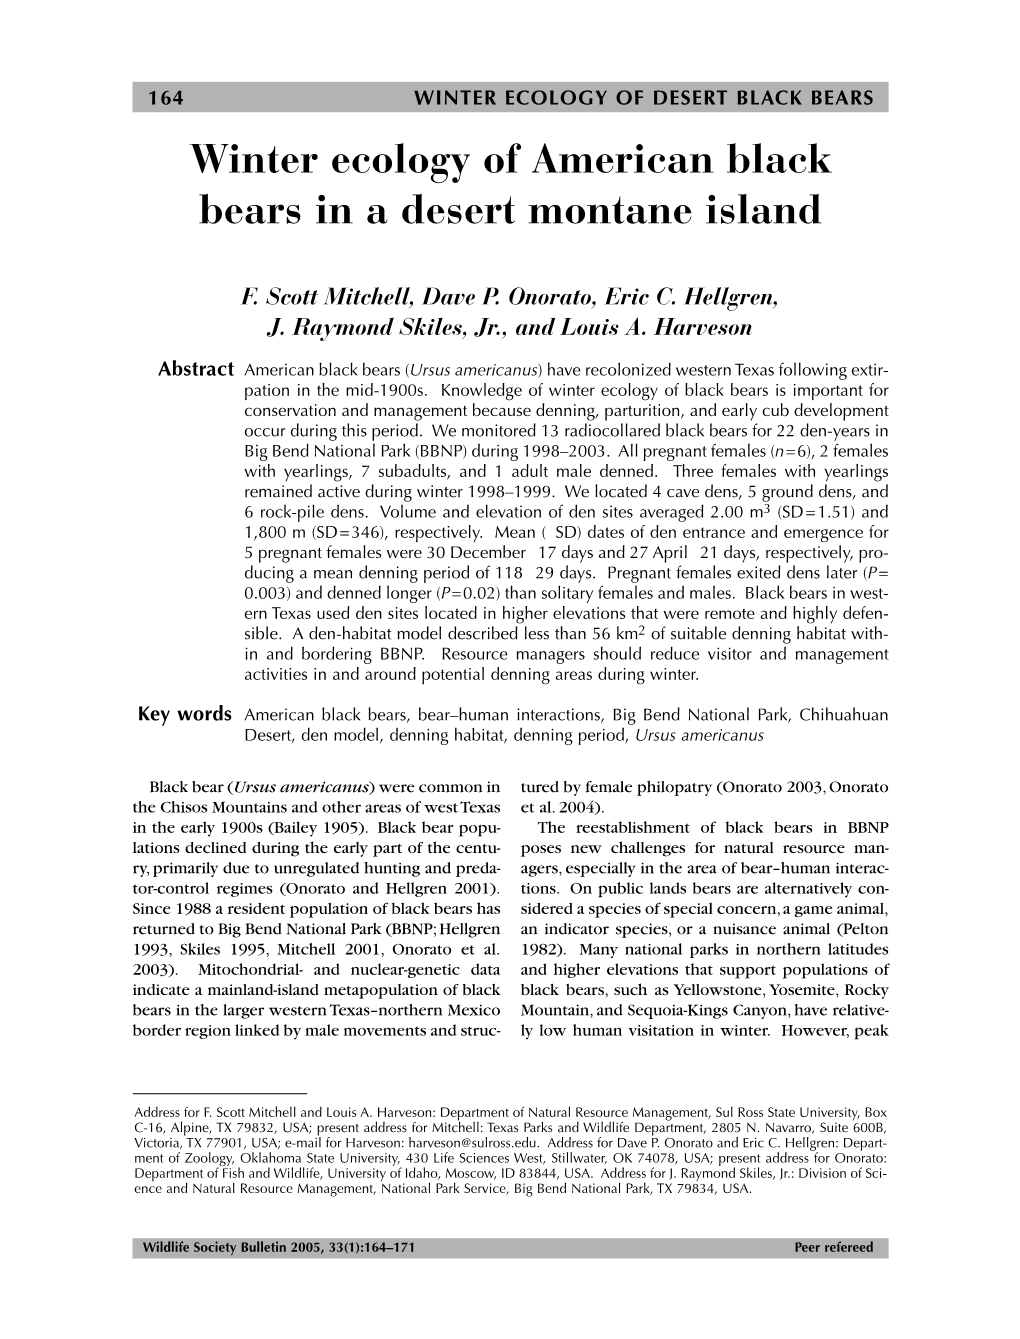 Winter Ecology of American Black Bears in a Desert Montane Island